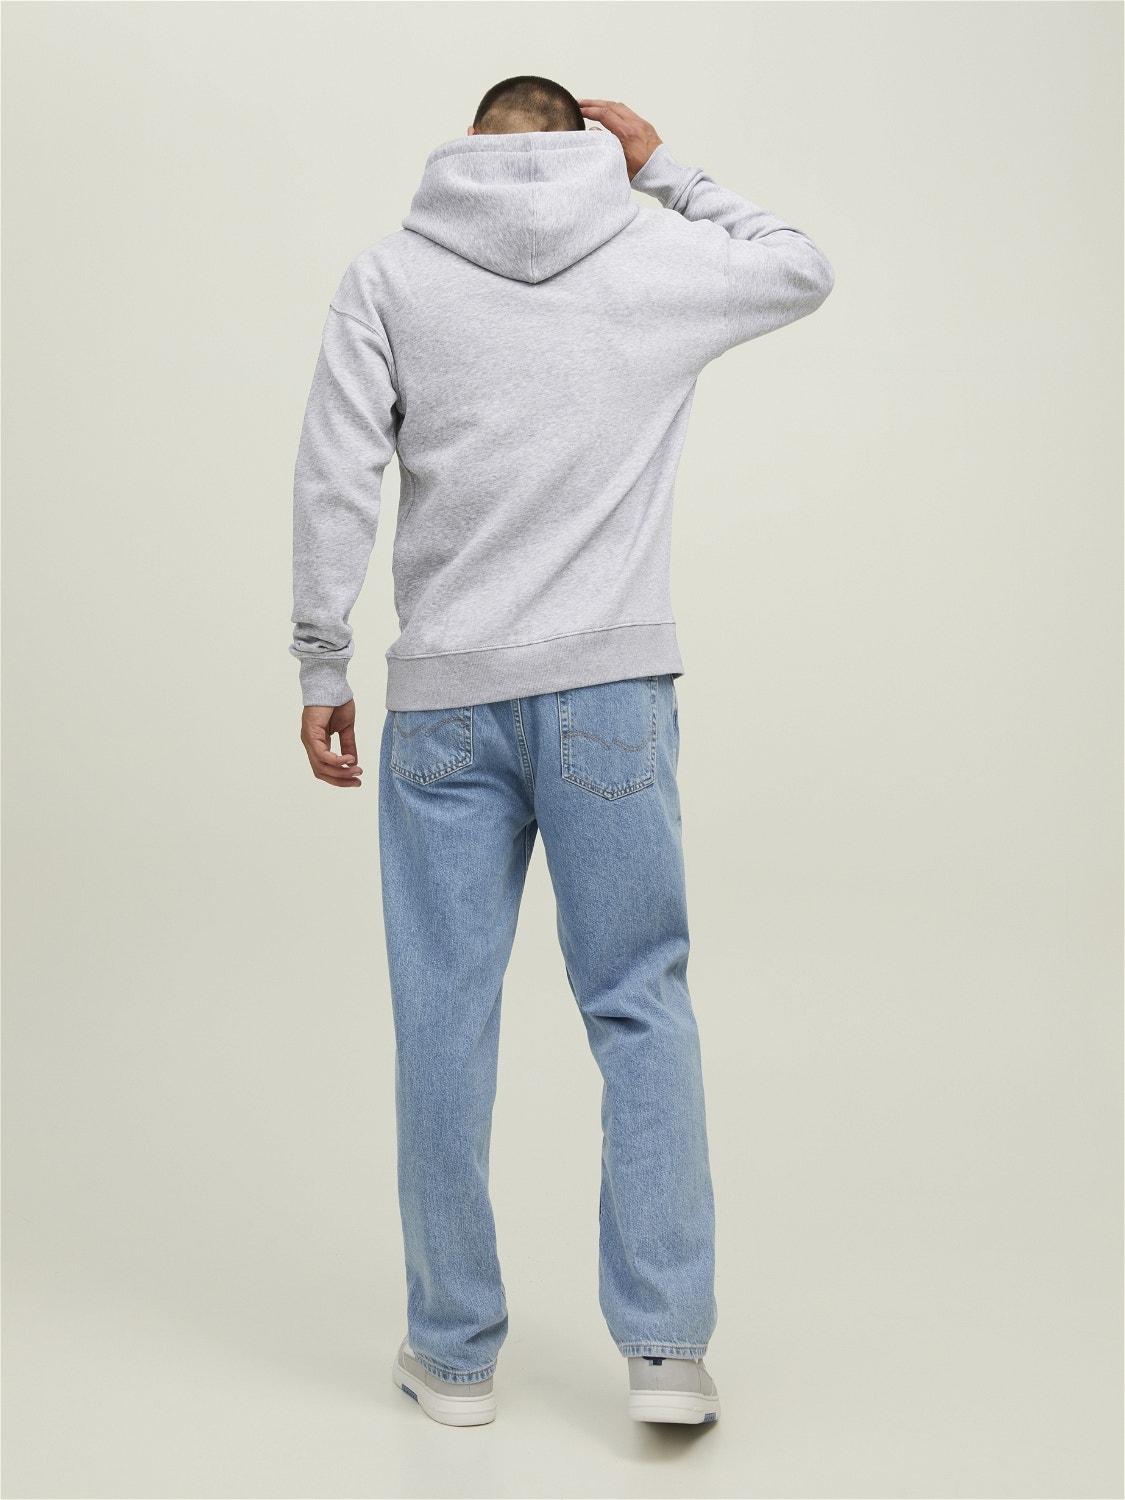 Jack & Jones Men's Plain Hoodie in Light Grey Relaxed Fit 12161145 soft  cotton